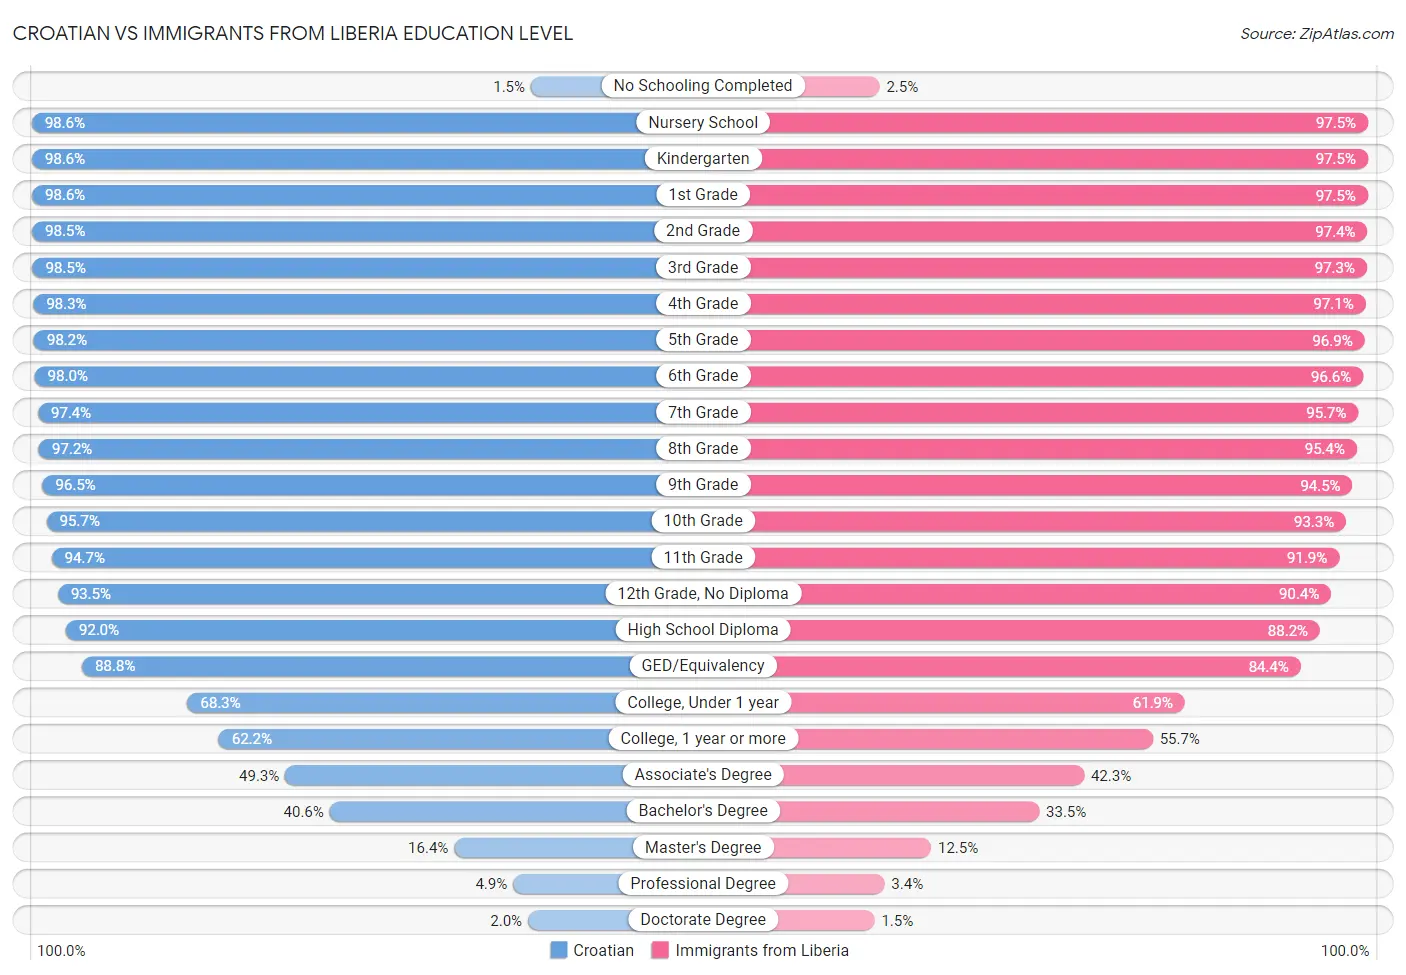 Croatian vs Immigrants from Liberia Education Level